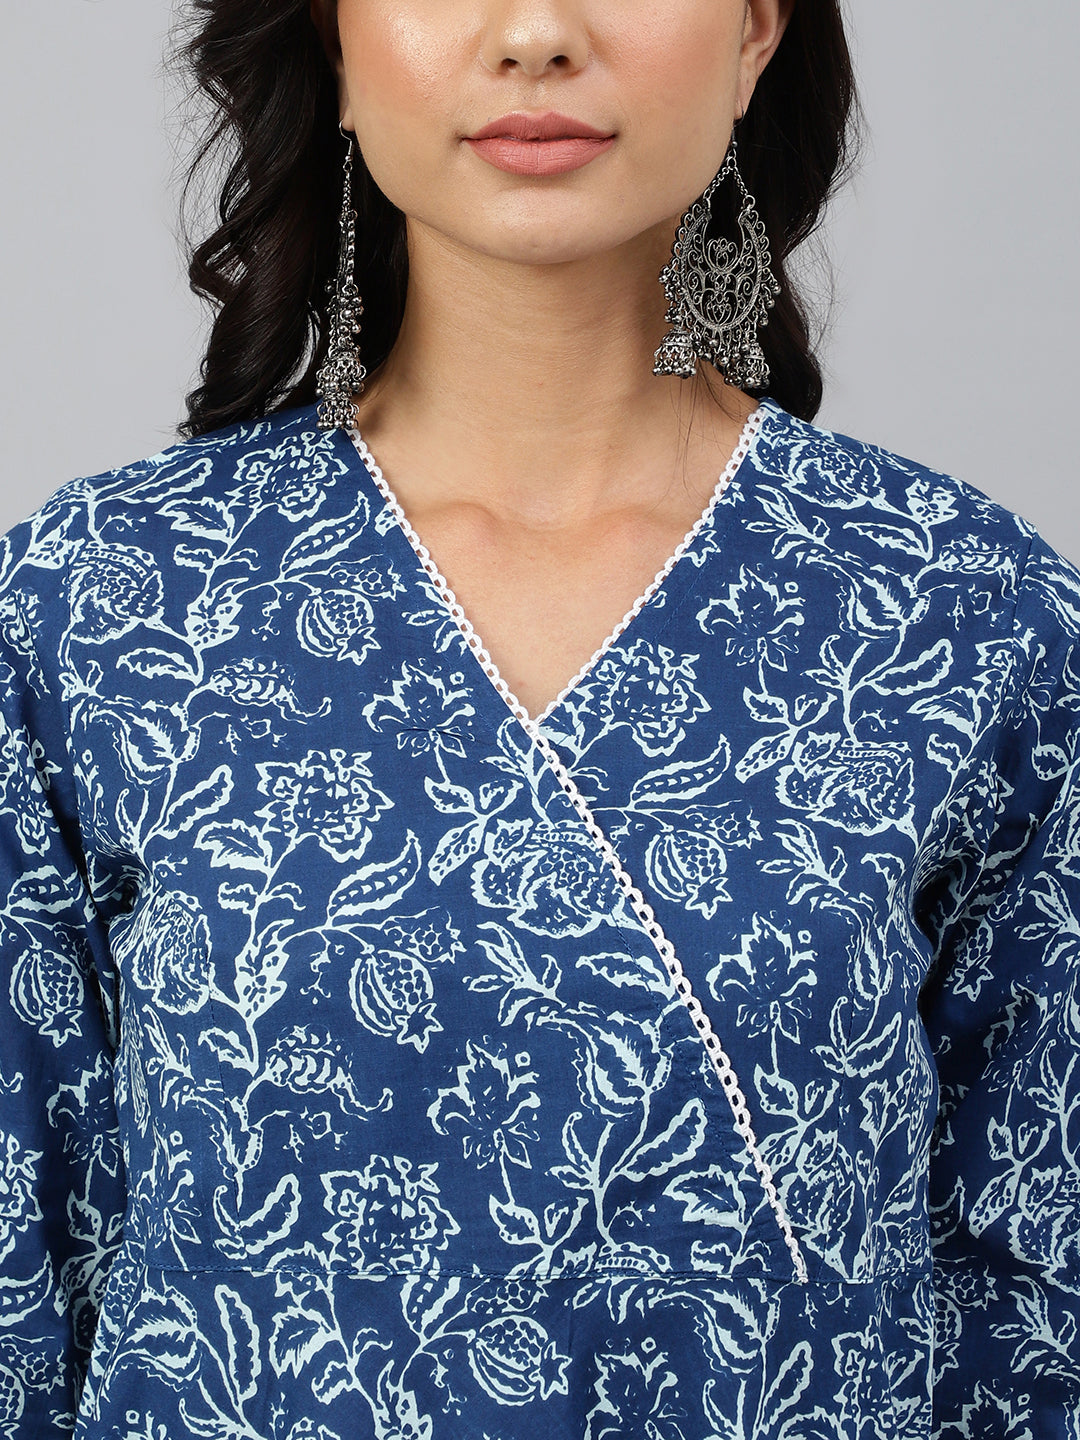 Women's Floral Printed Navy Blue Cotton Dress - Janasya